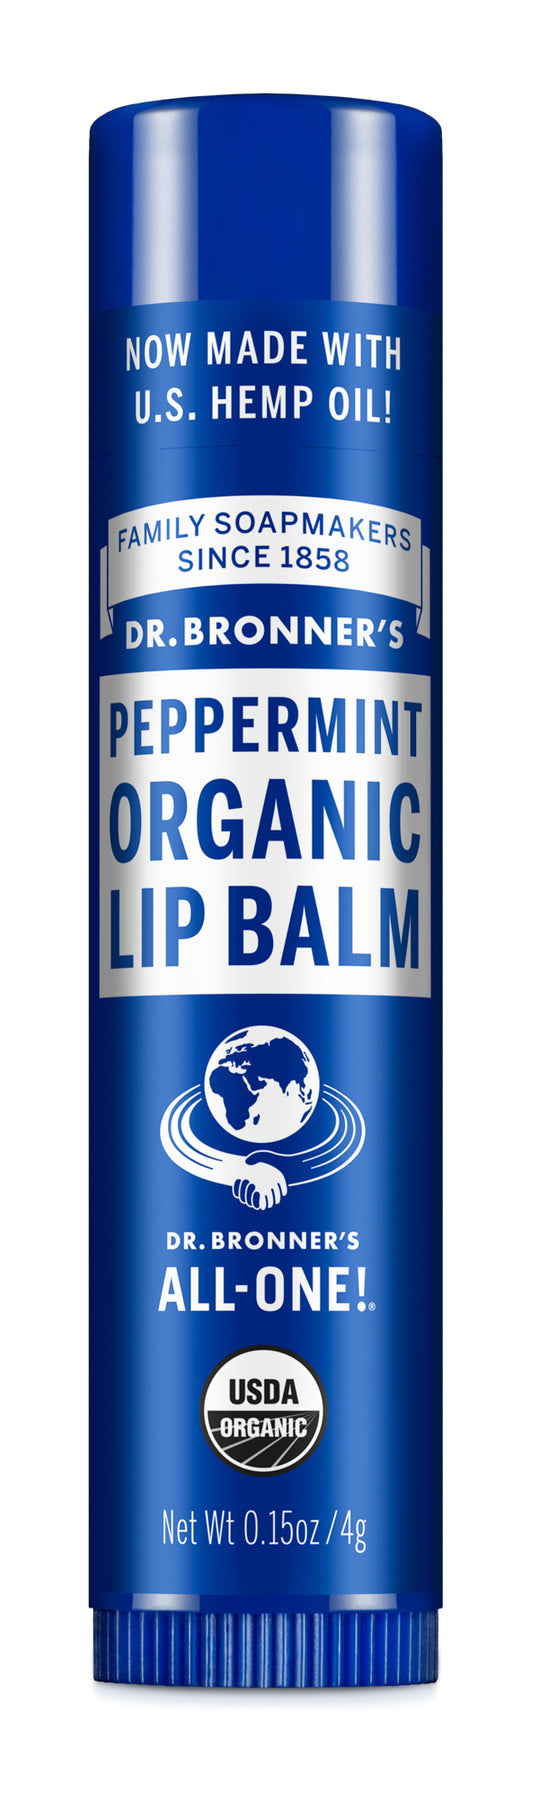 Dr. Bronner’s Organic Lip Balm